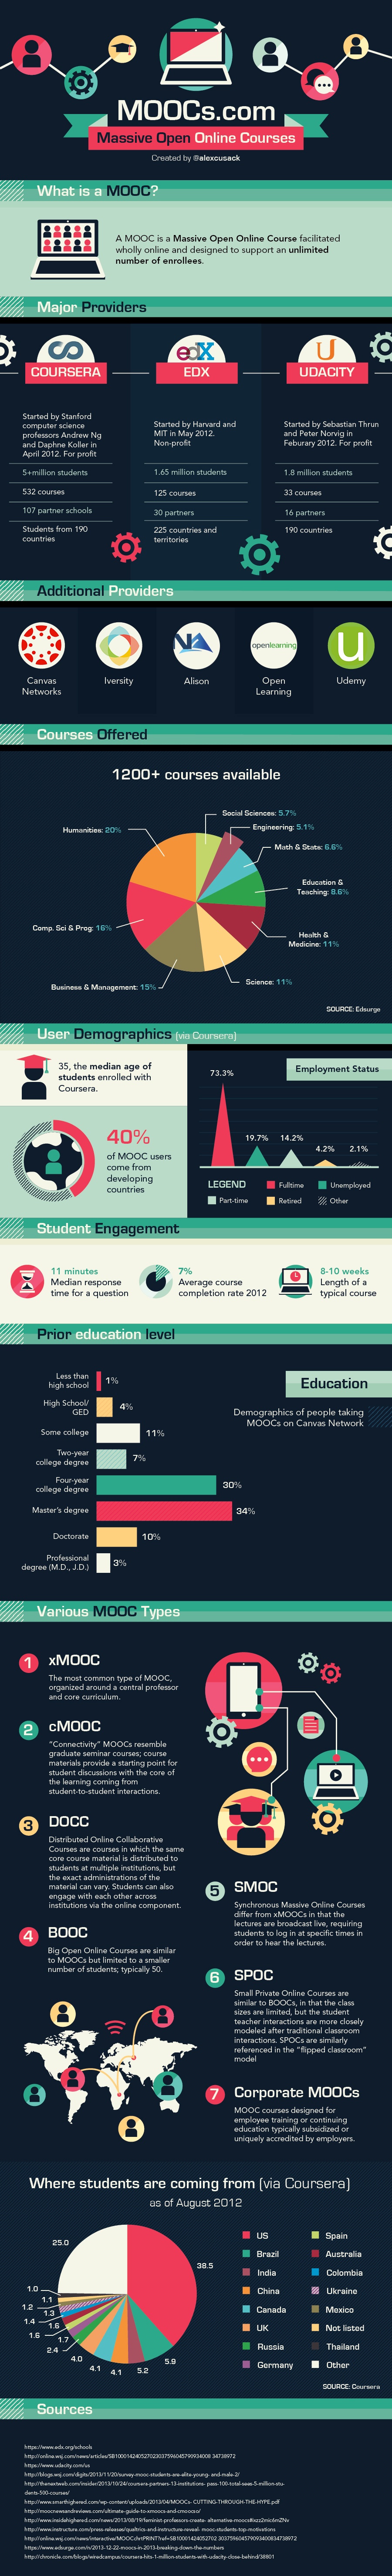 Massive Open Online Courses Infographic